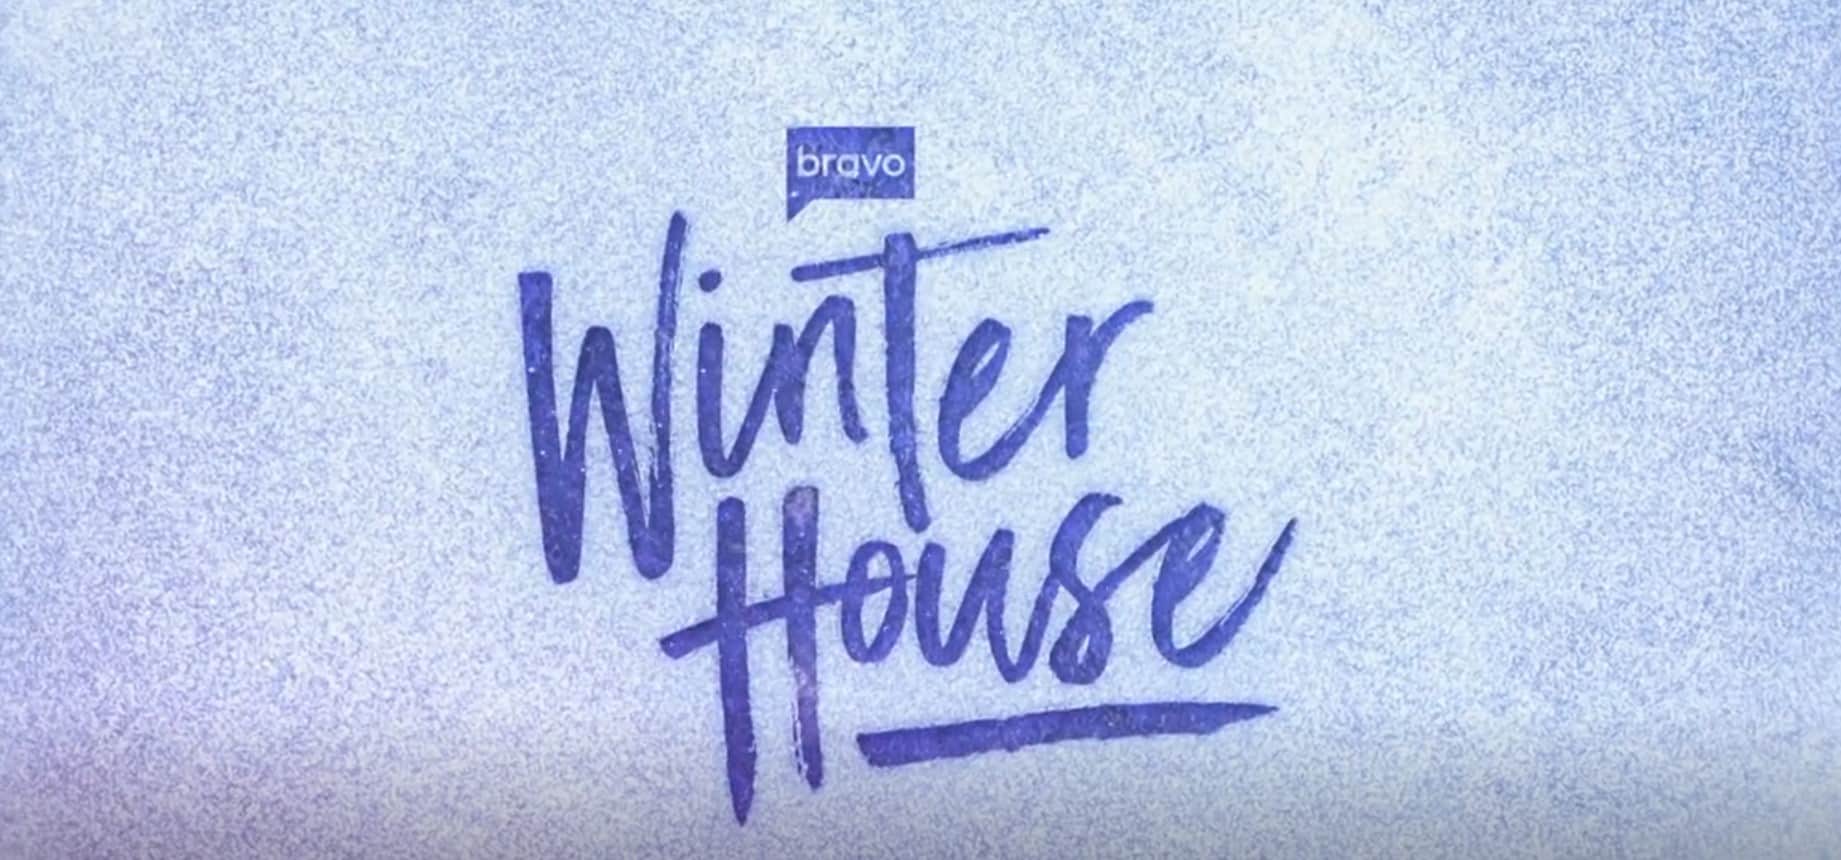 Winter House Season 3